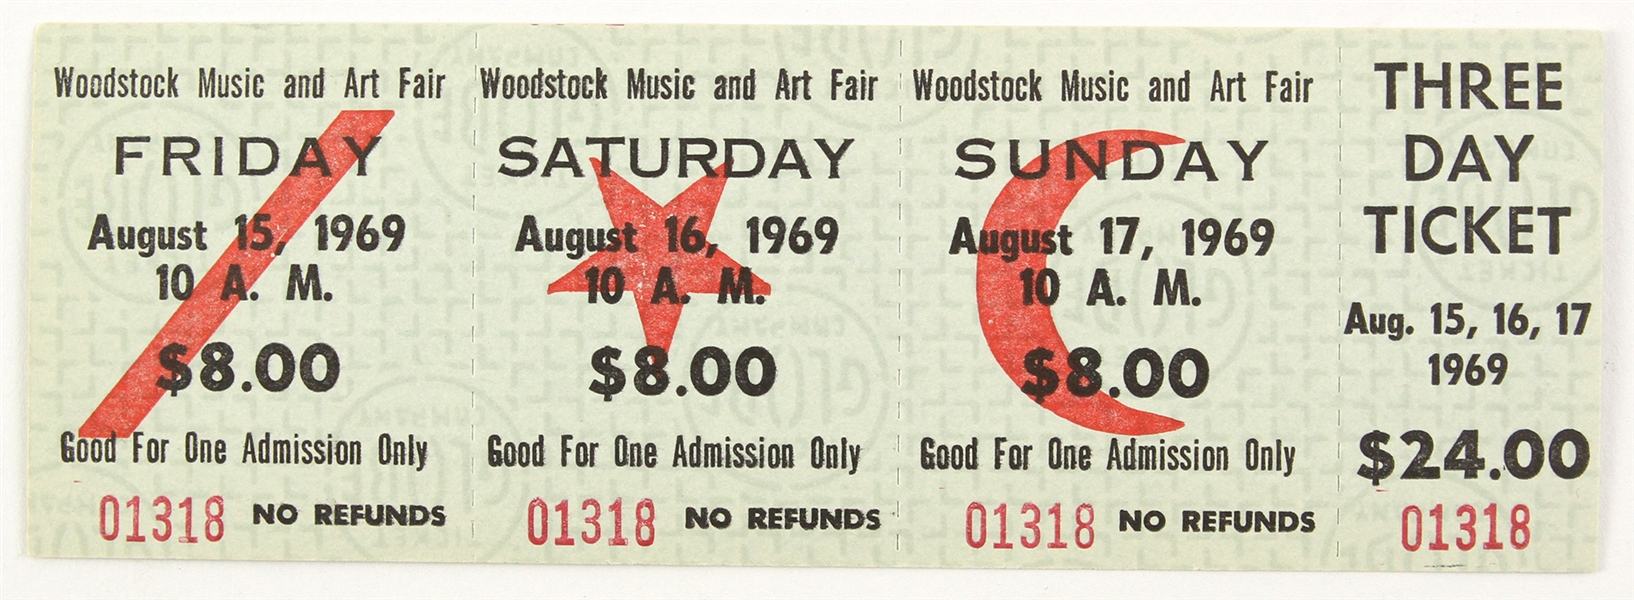 1969 Woodstock Music and Art Fair Ticket